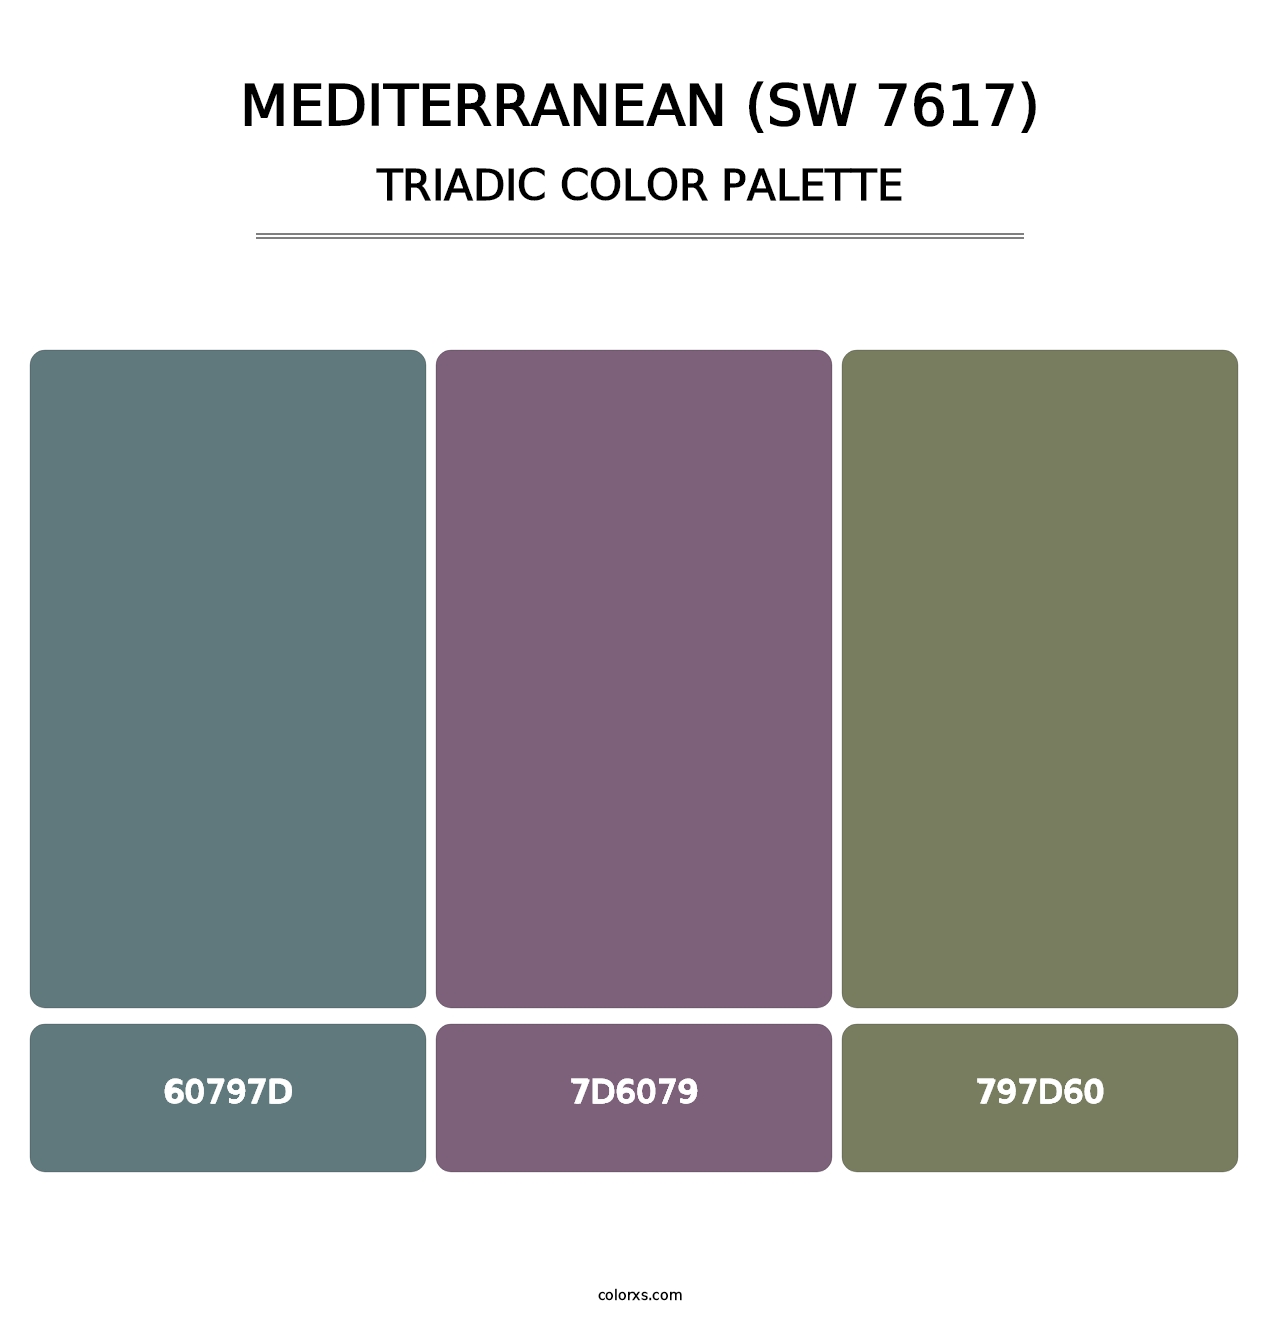 Mediterranean (SW 7617) - Triadic Color Palette